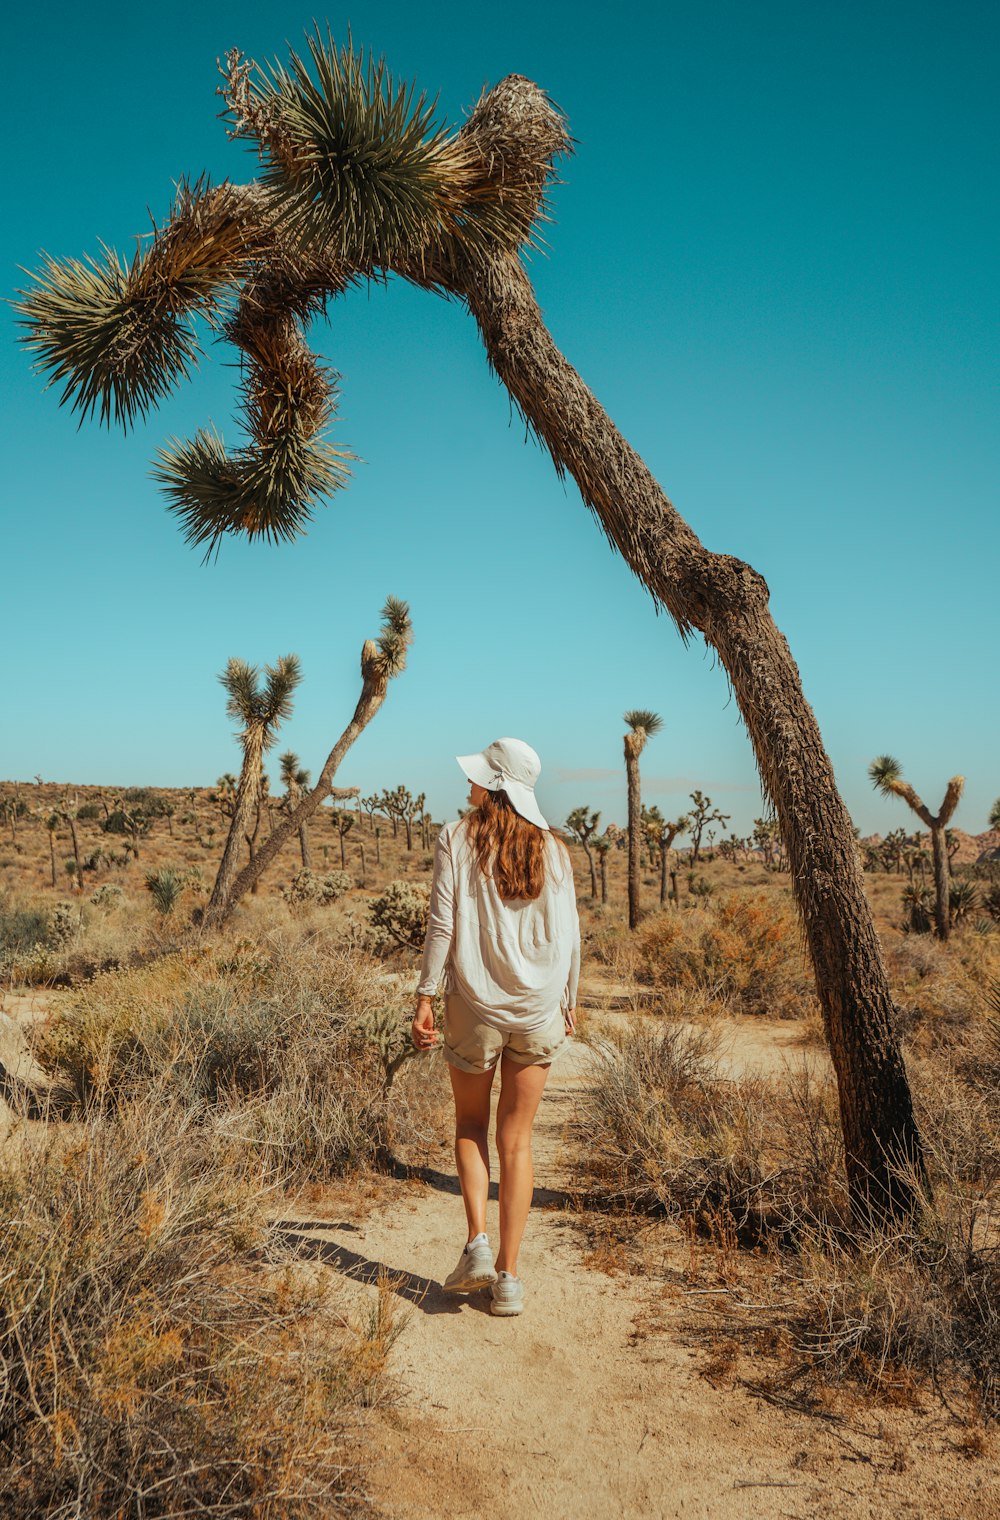 a woman walking down a dirt path next to a palm tree